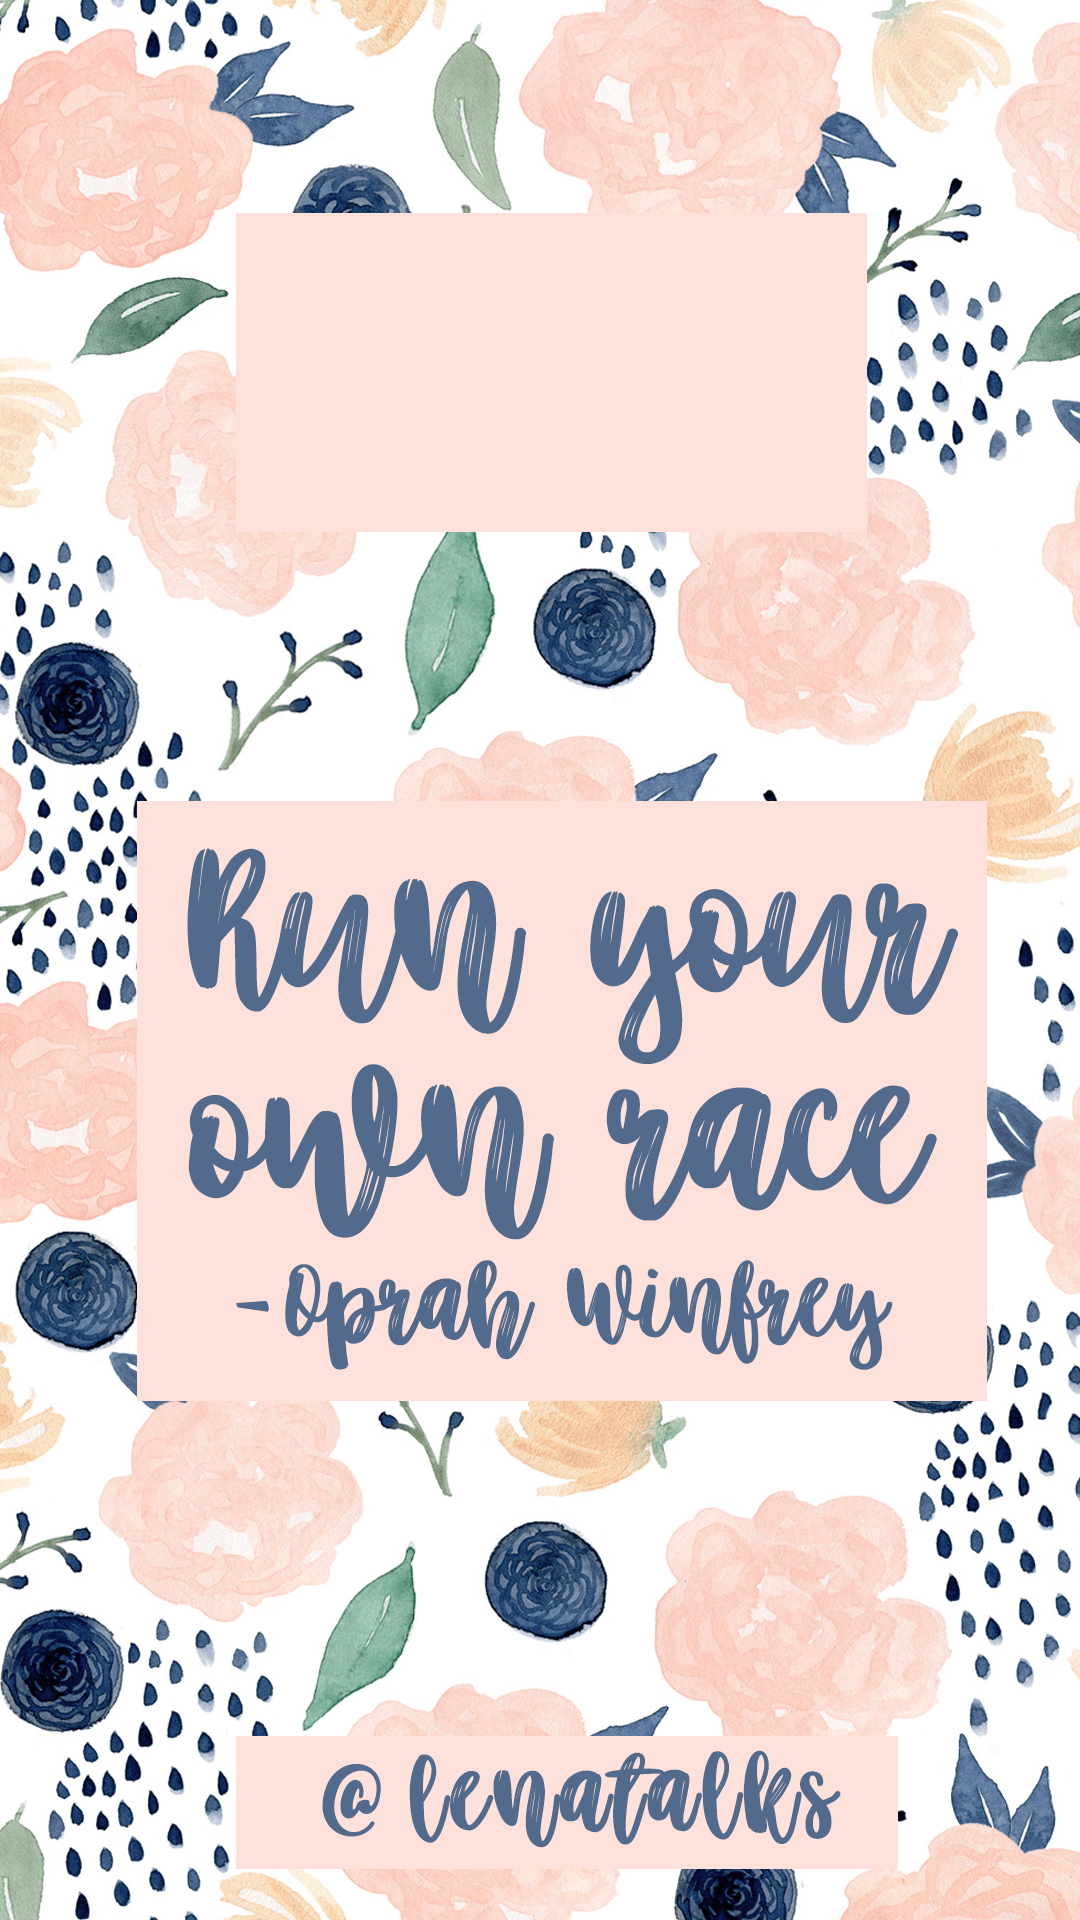 Run Your Own Race Oprah Winfrey Quote iPhone Wallpaper H Tt Rk Pek